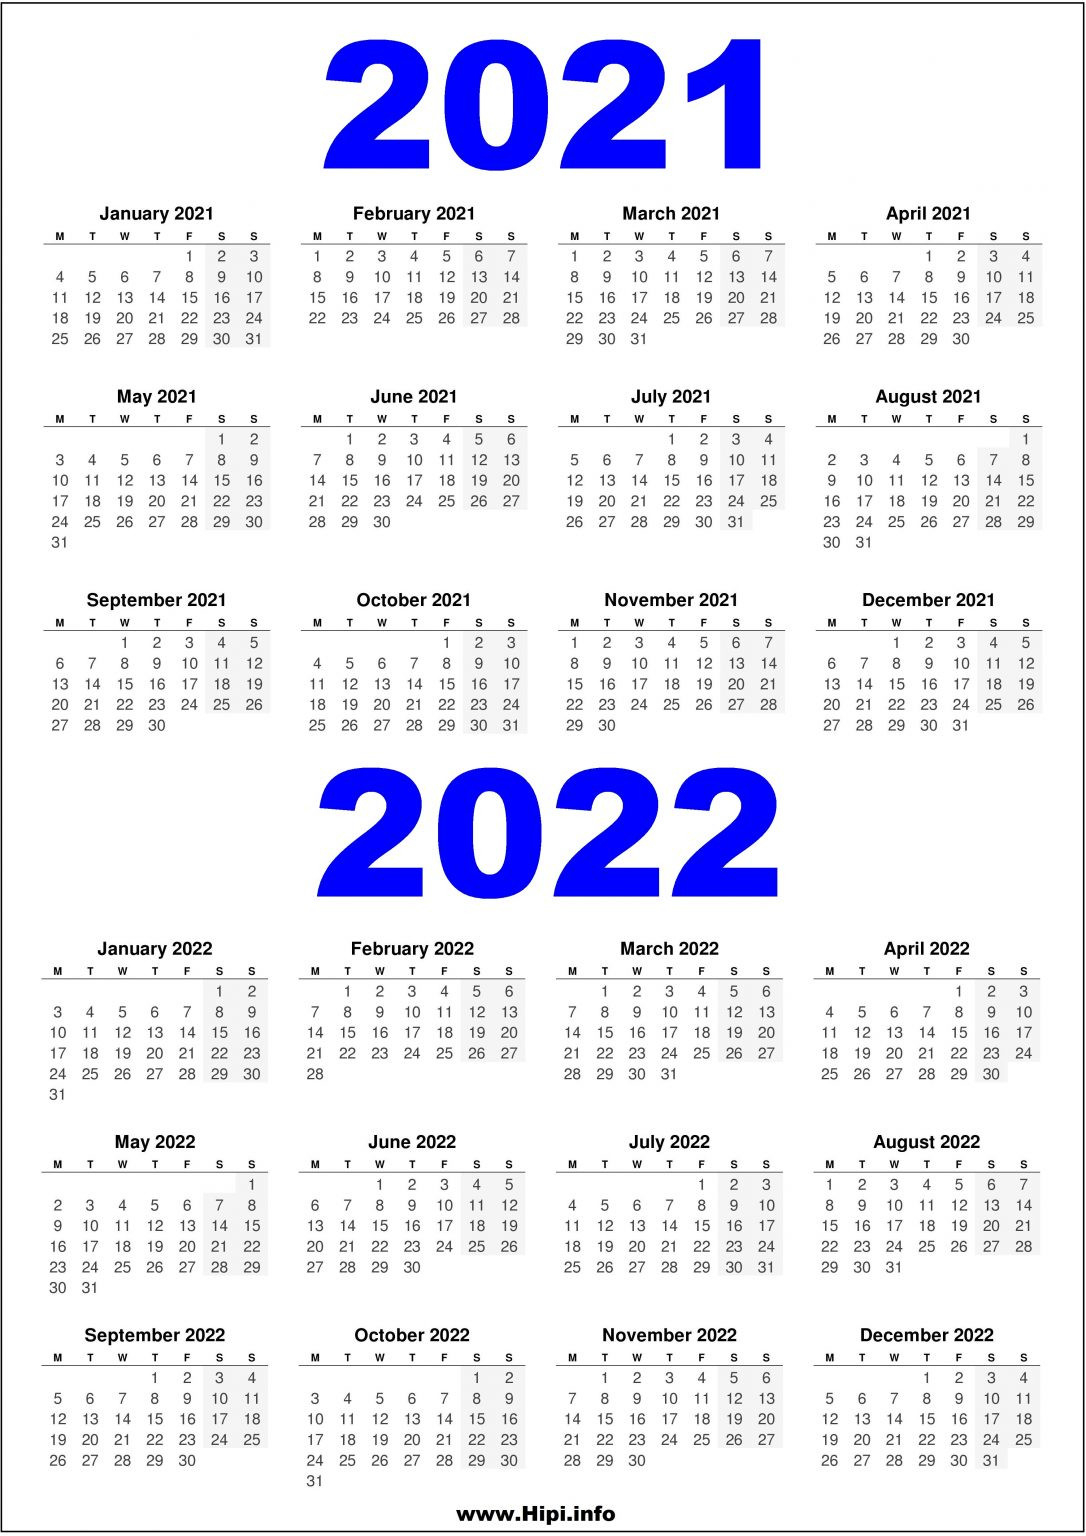 2021 And 2022 Printable Uk Calendar - 2 Year - Hipi | Calendars-Two Year Calendar 2021 And 2022 Printable